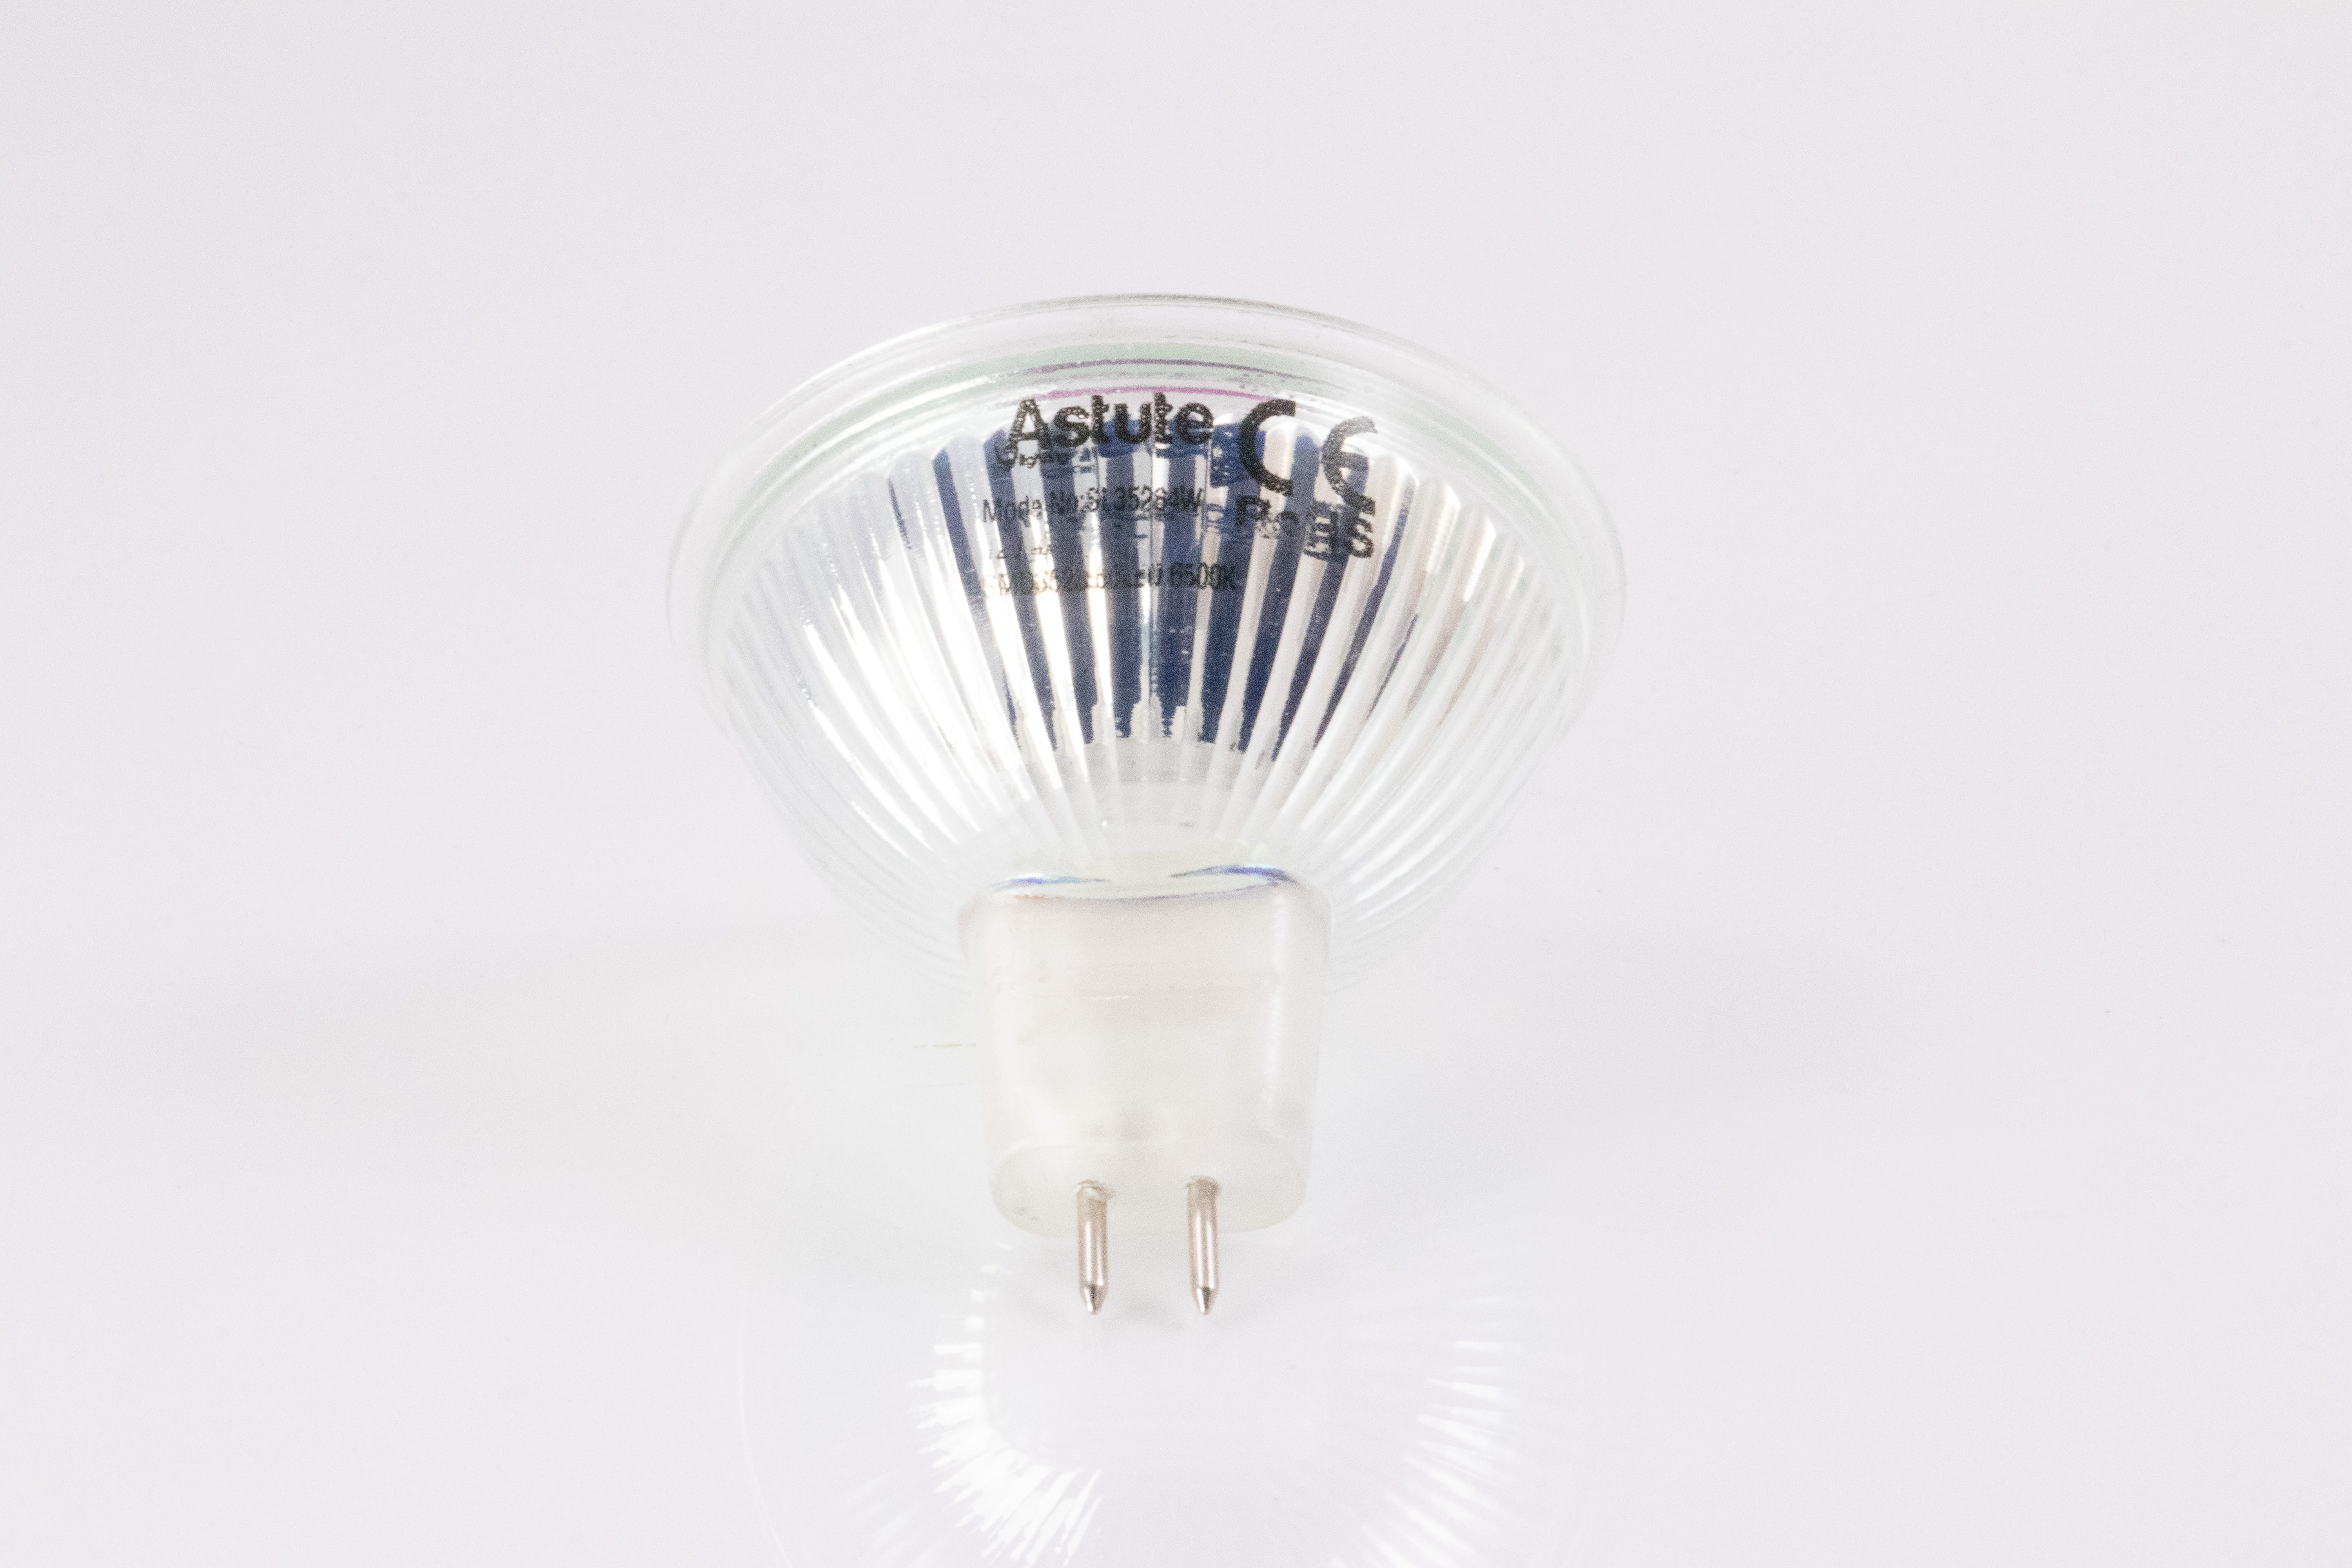 MR16 LED Bulbs